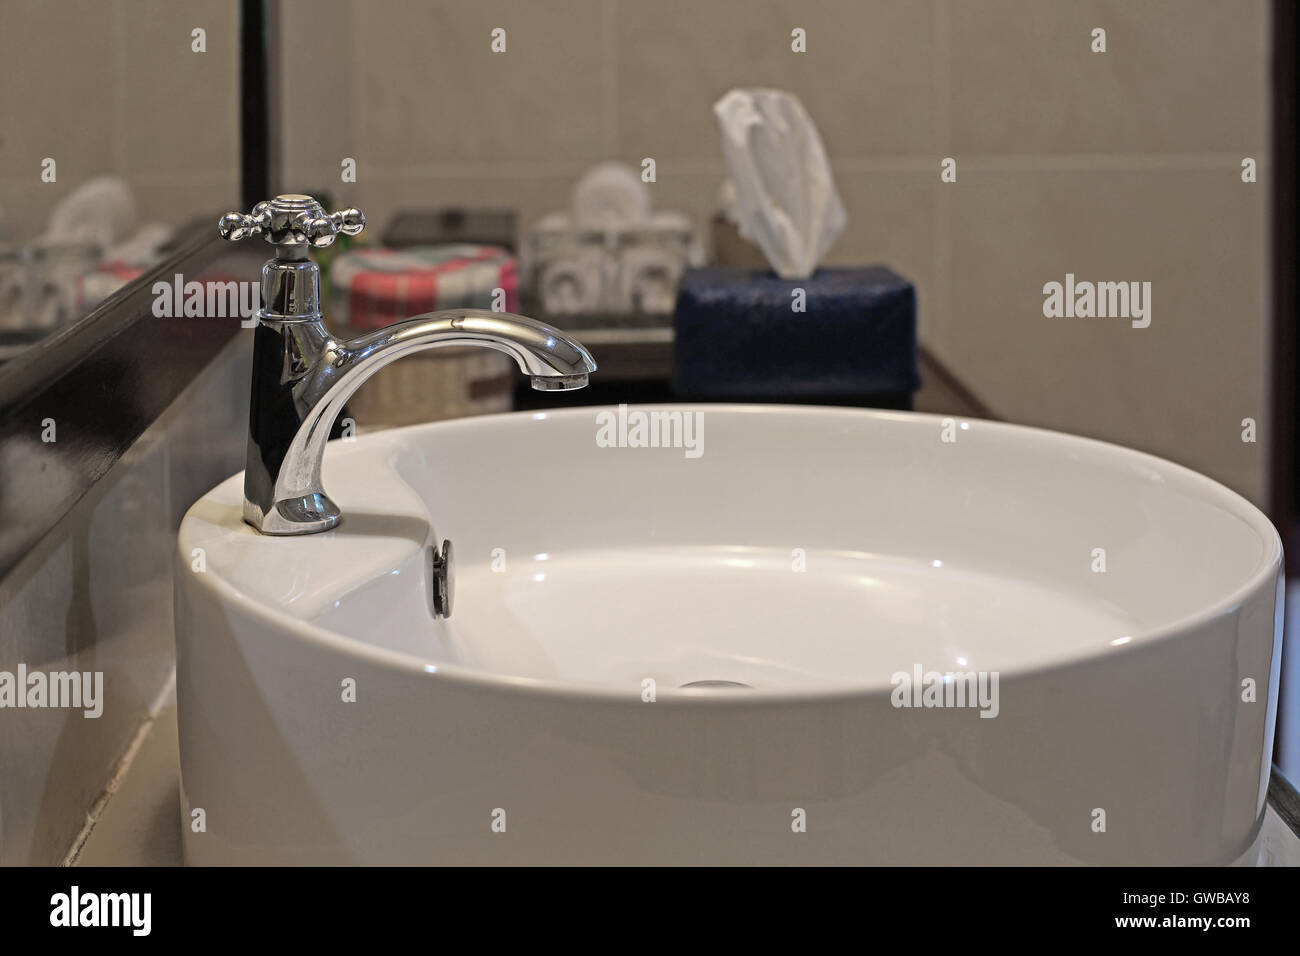 ceramic washbasin and metal faucet in bathroom Stock Photo